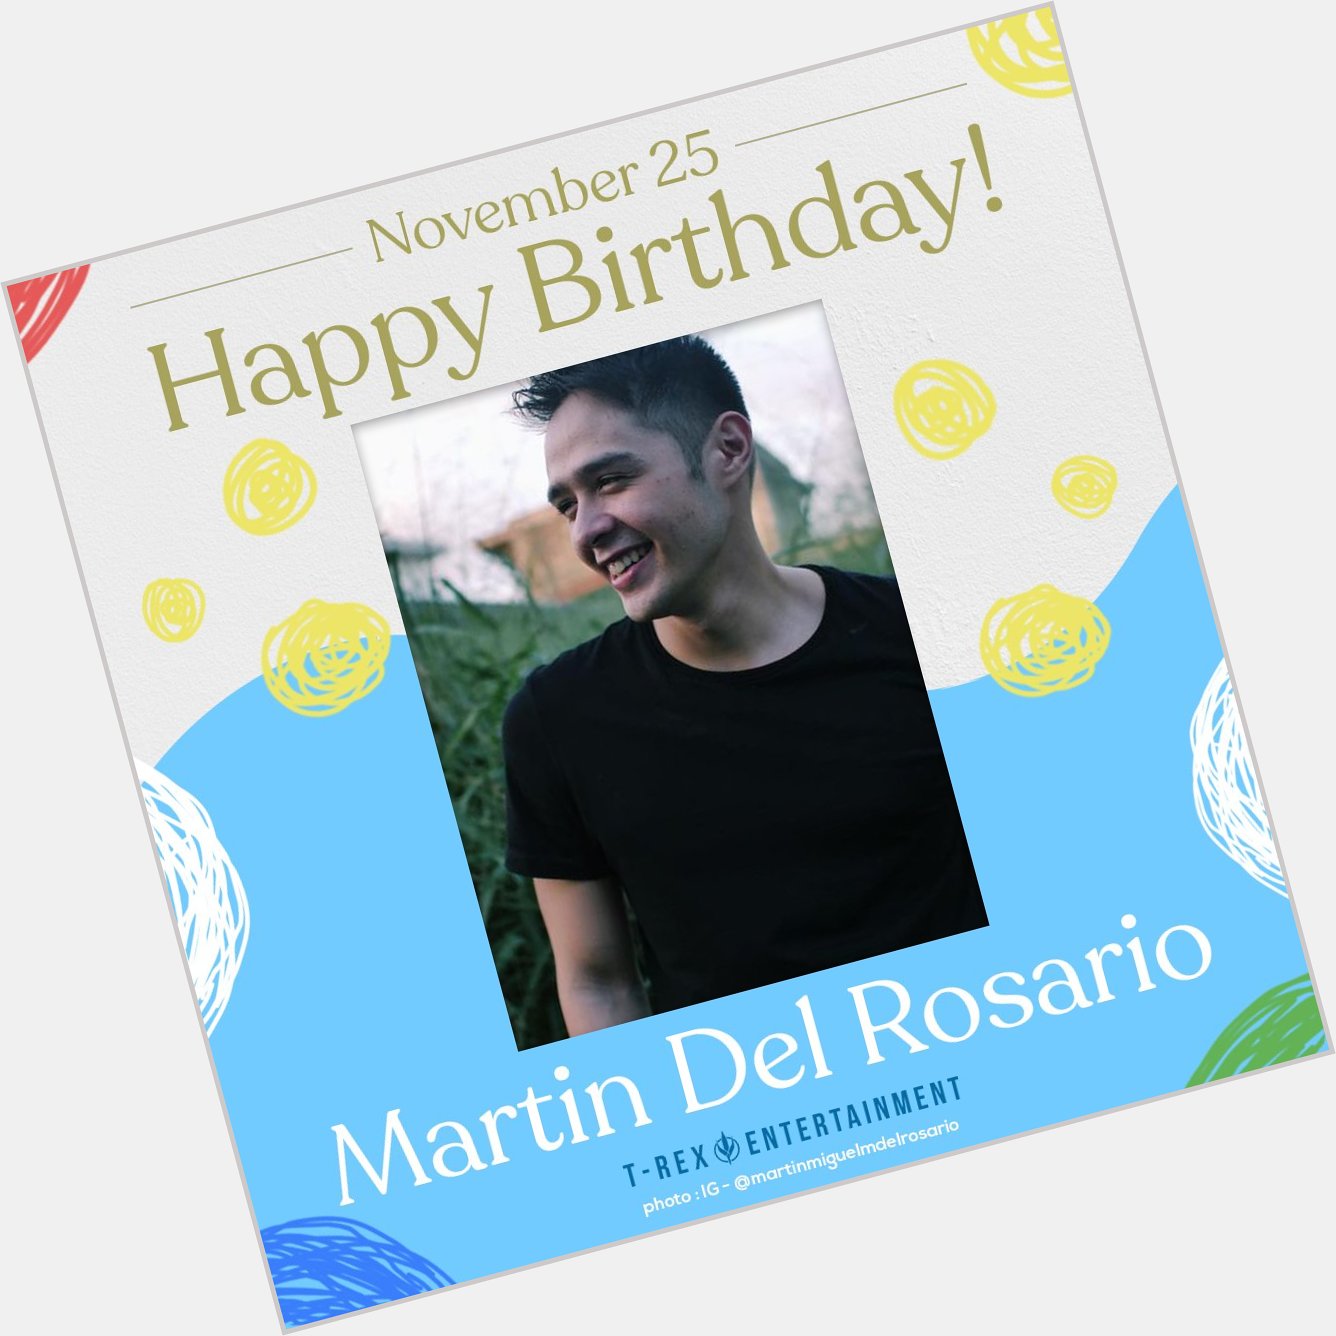 Happy birthday, Martin del Rosario ! Wishing you the best in life! 